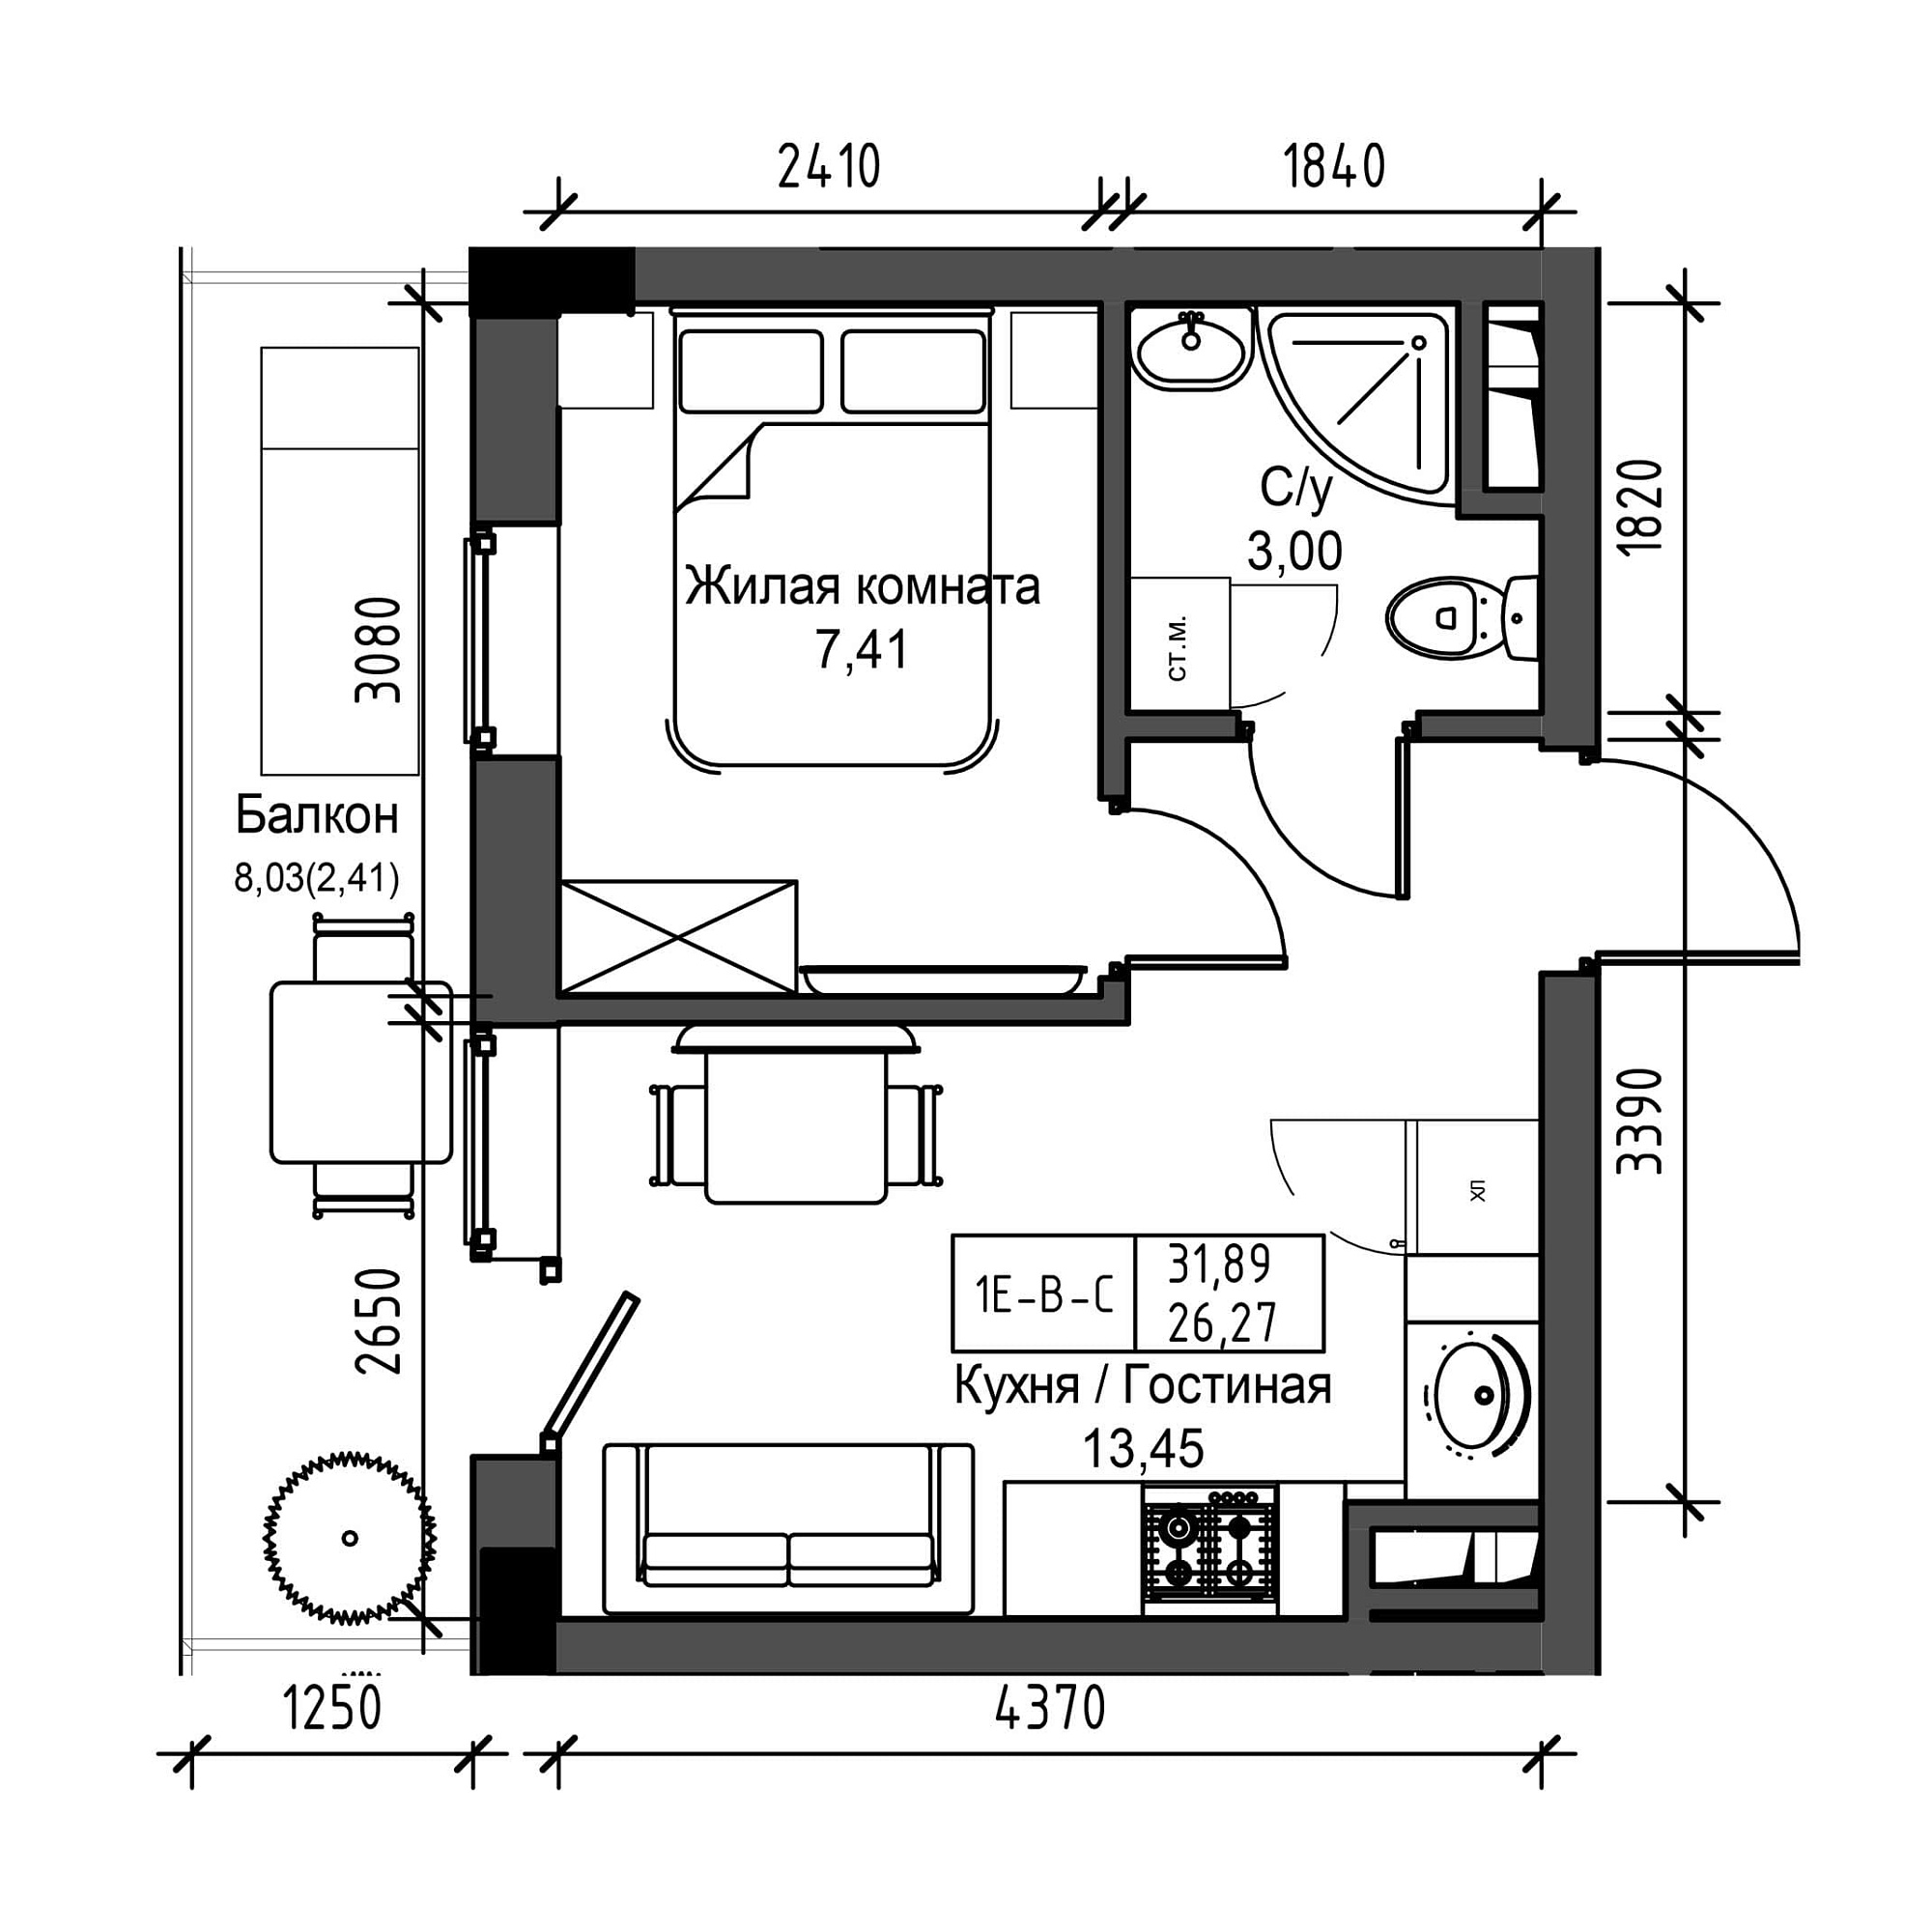 Planning 1-rm flats area 26.27m2, UM-001-04/0015.